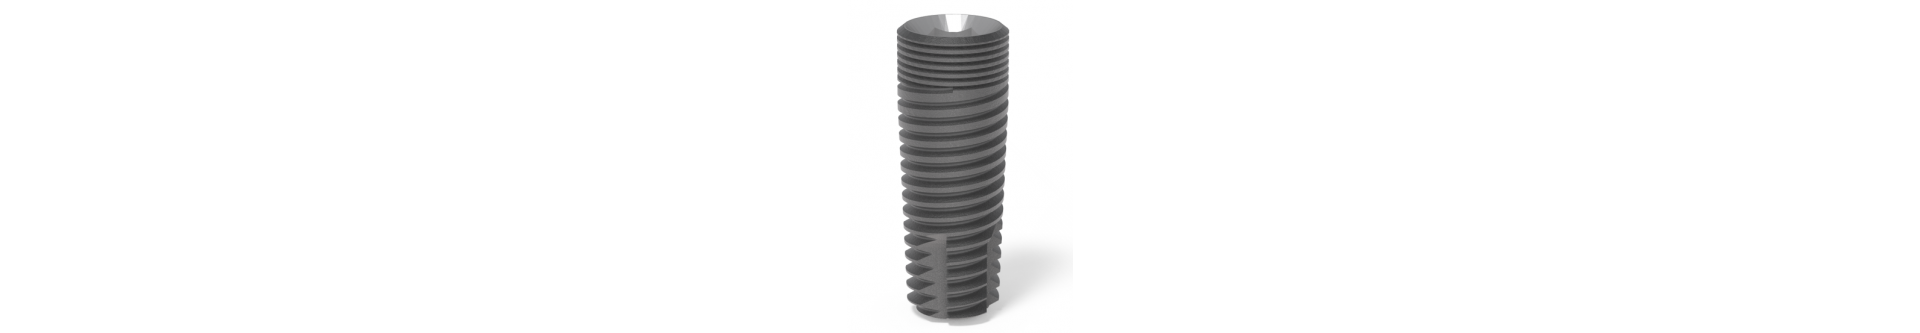 implant cylinder